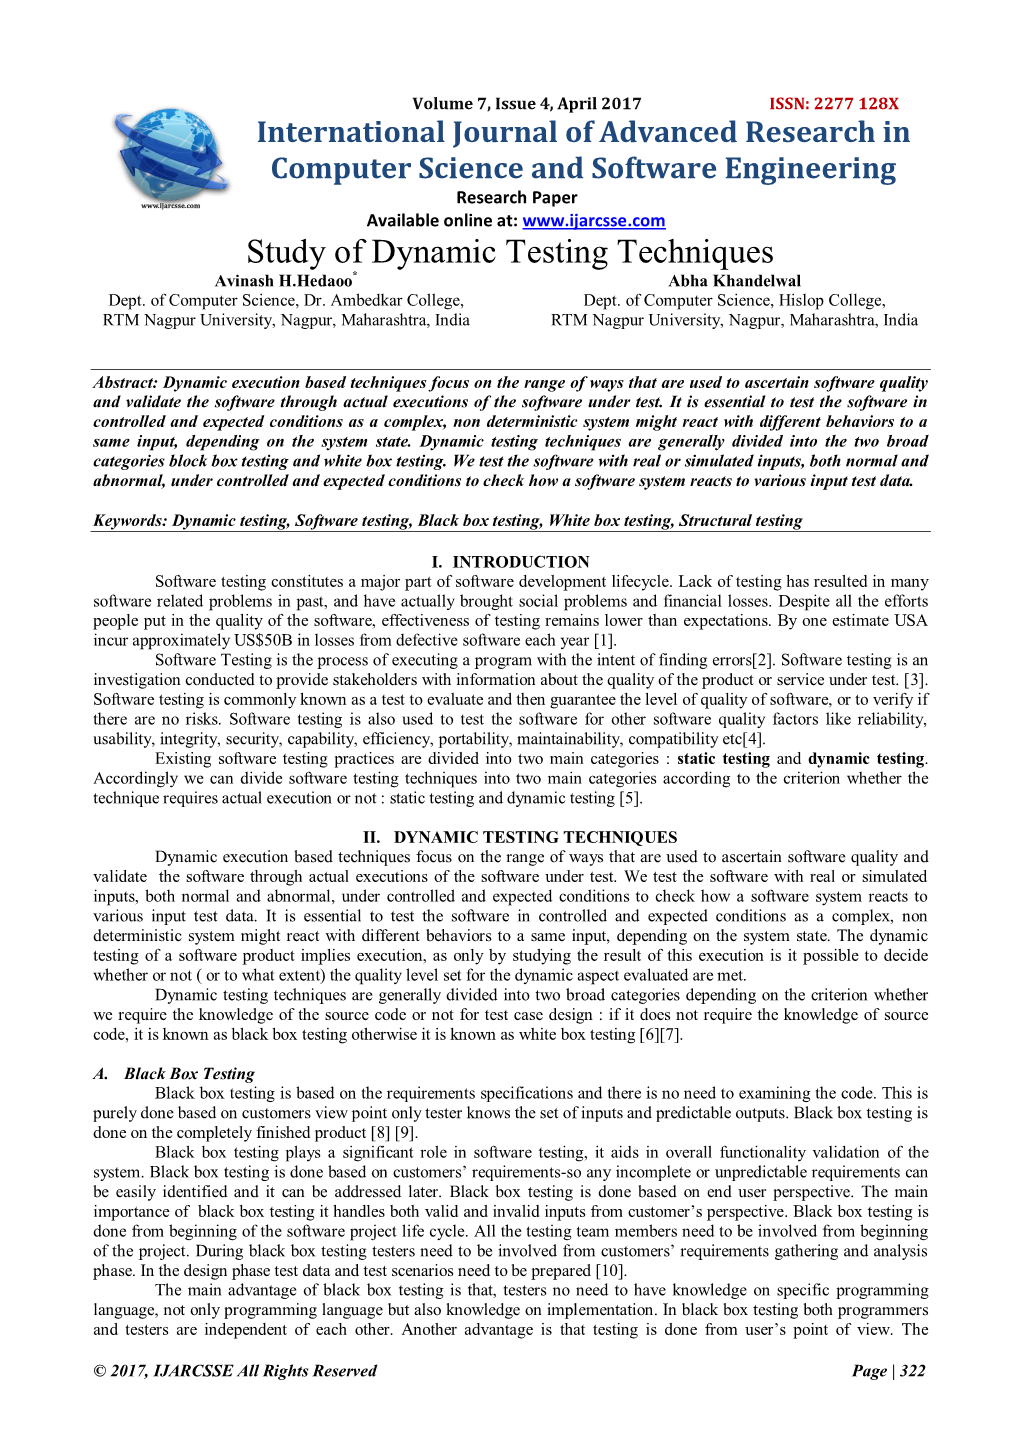 Study of Dynamic Testing Techniques Avinash H.Hedaoo* Abha Khandelwal Dept